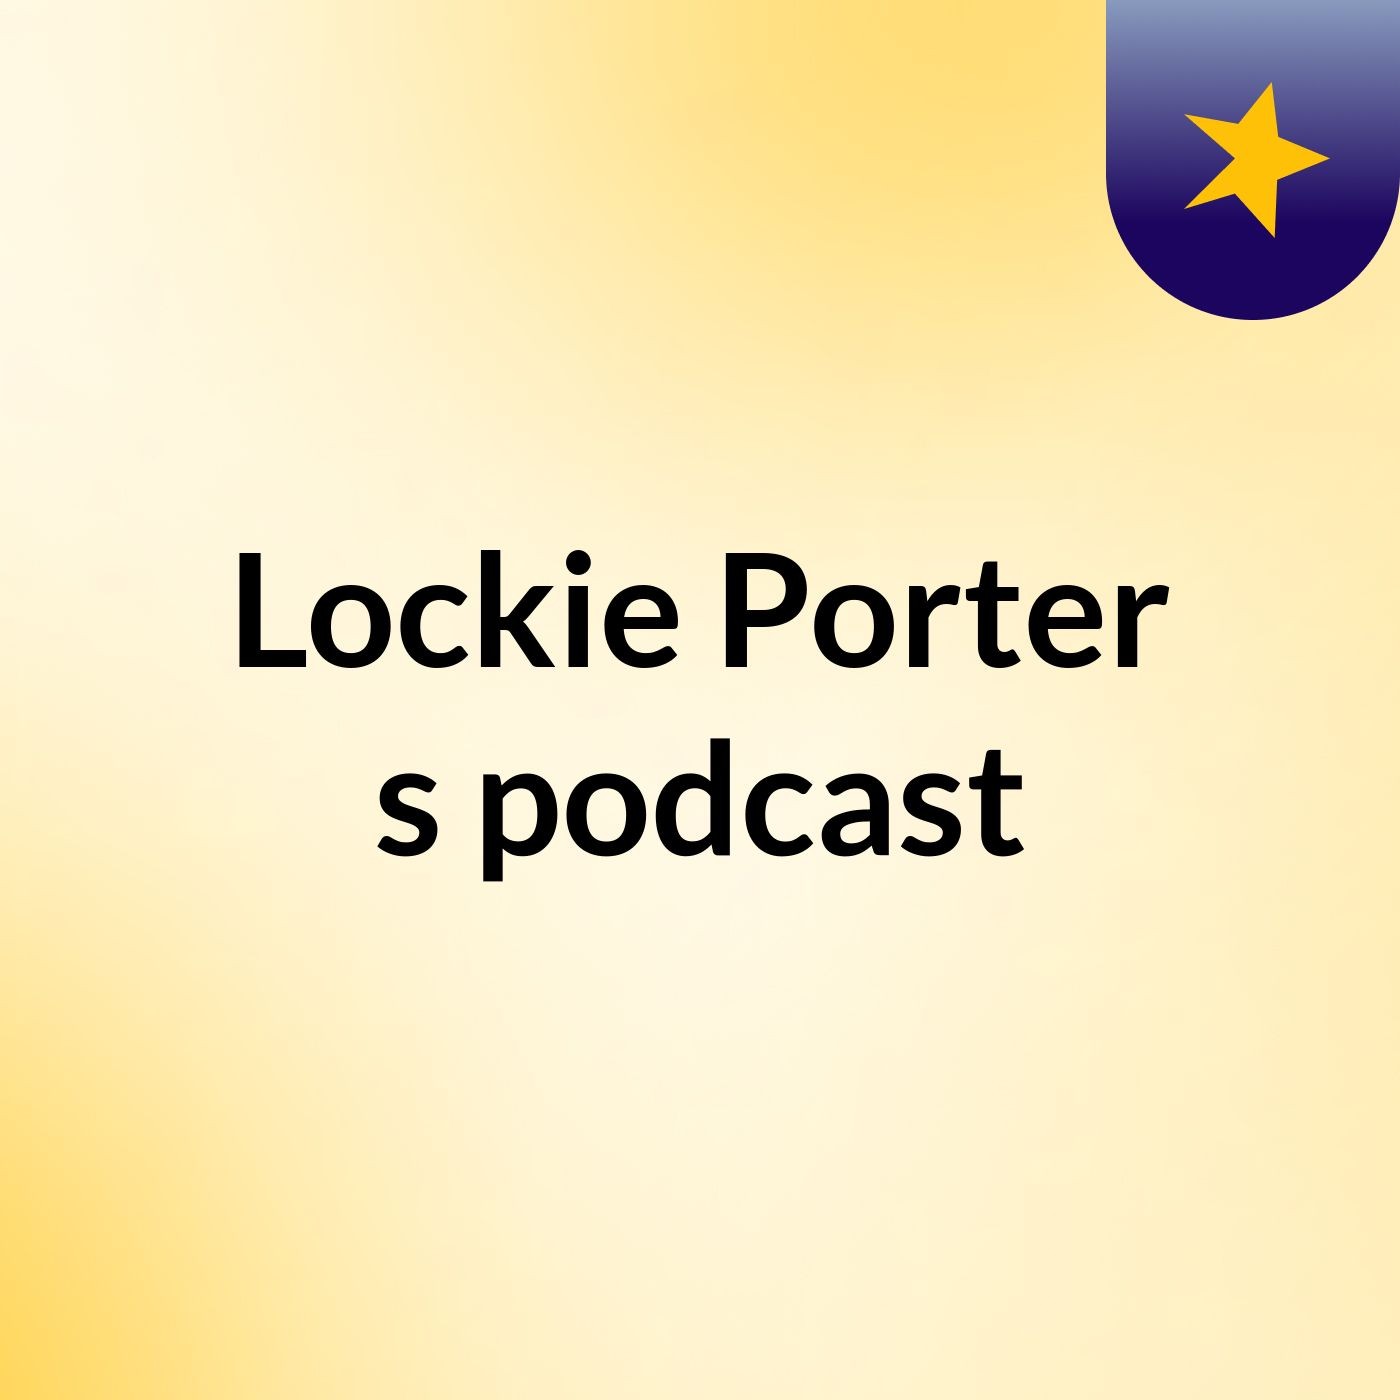 Episode 2 - Lockie Porter's podcast